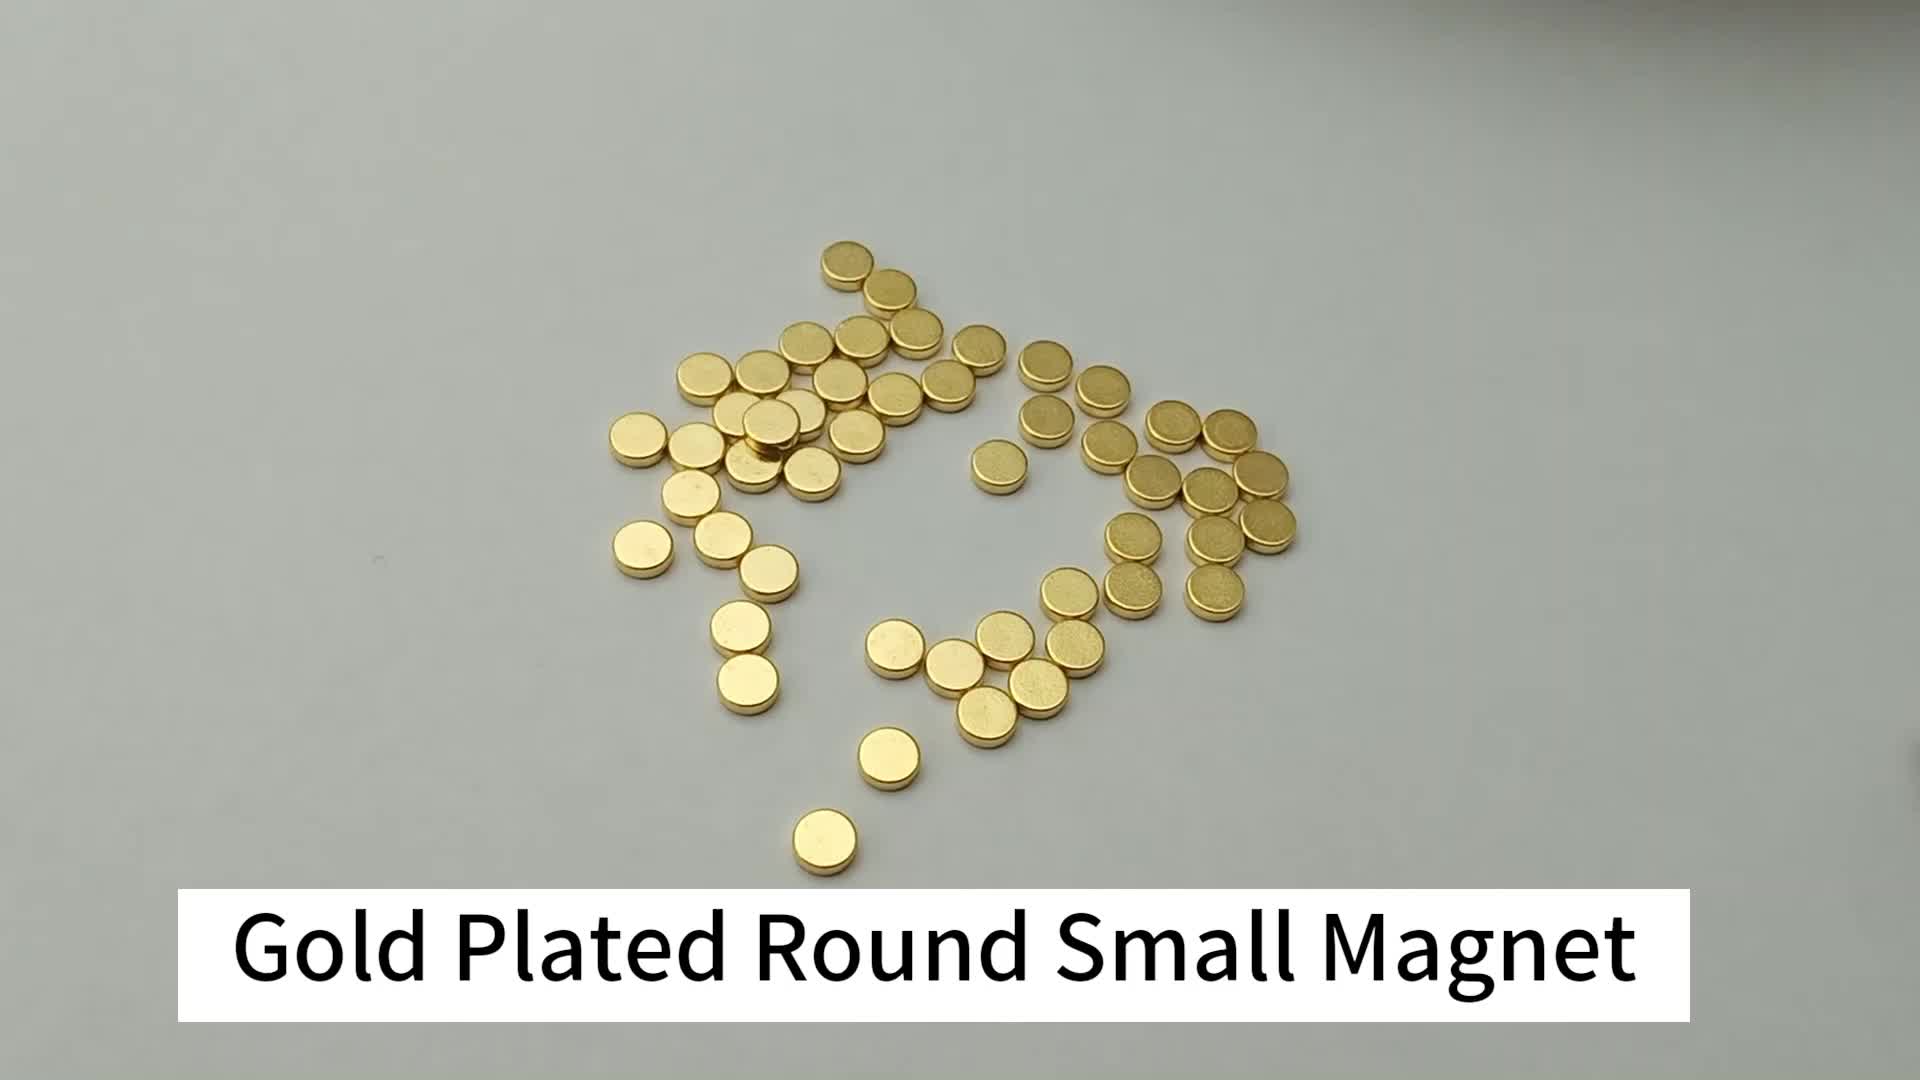 24k Gold Ring Magnet Gilded Mayores mayoristas N52 Magnet Price1